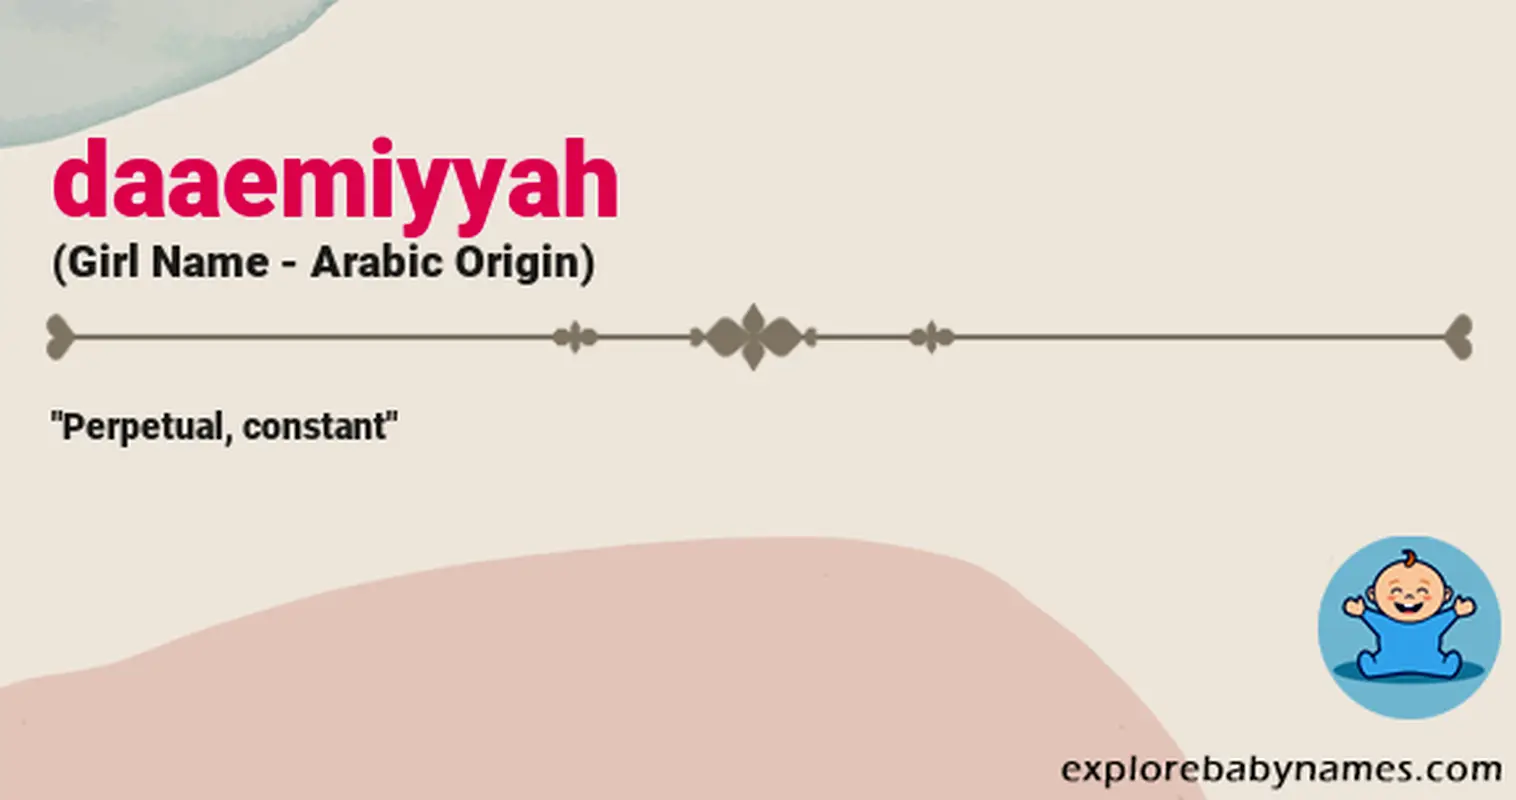 Meaning of Daaemiyyah